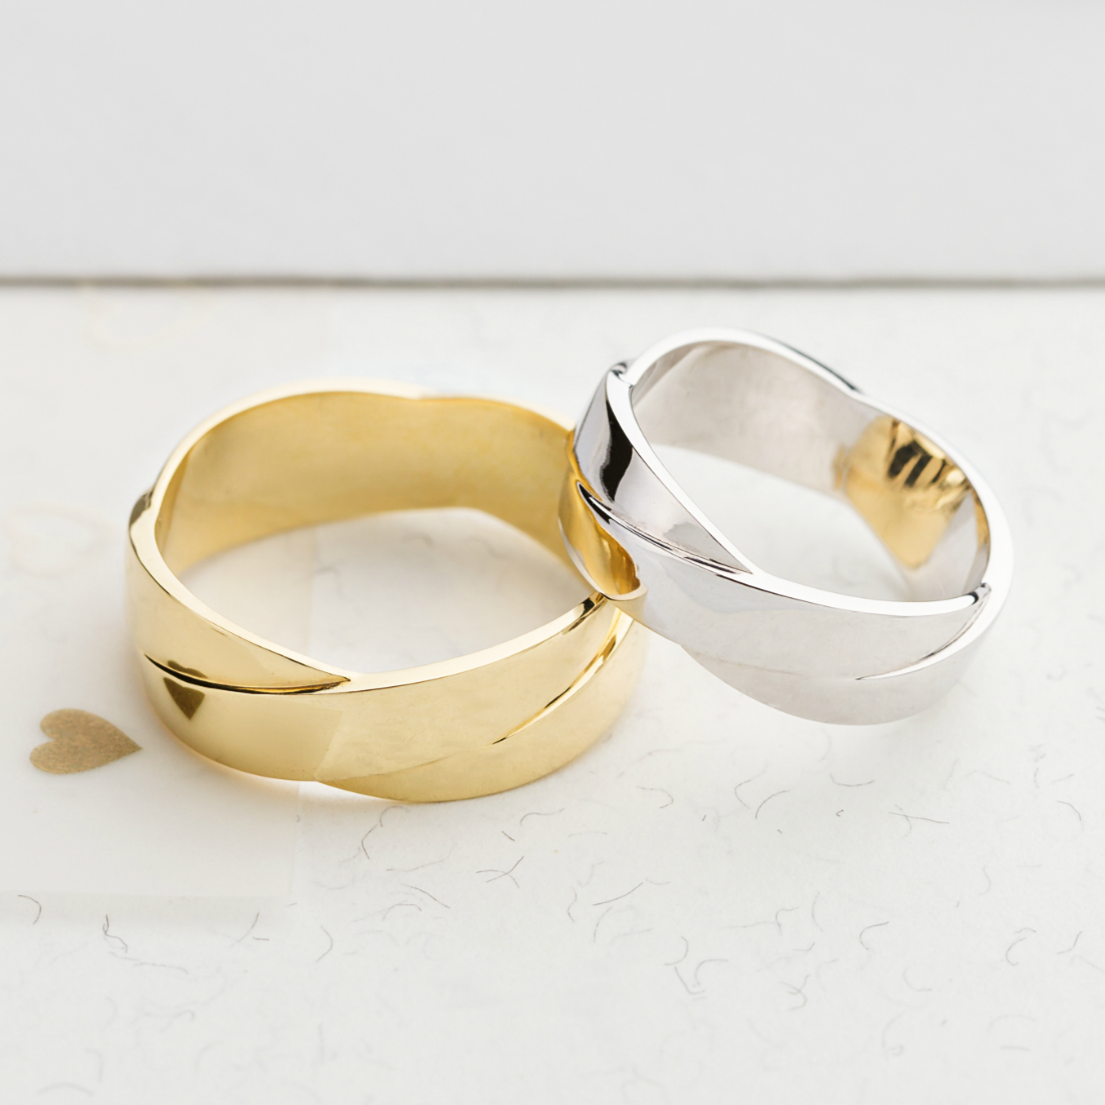 Unique wedding bands set. Gold wedding rings. Braided wedding bands. Twiated wedding rings. Couple ringd set. Solid gold wedding bands